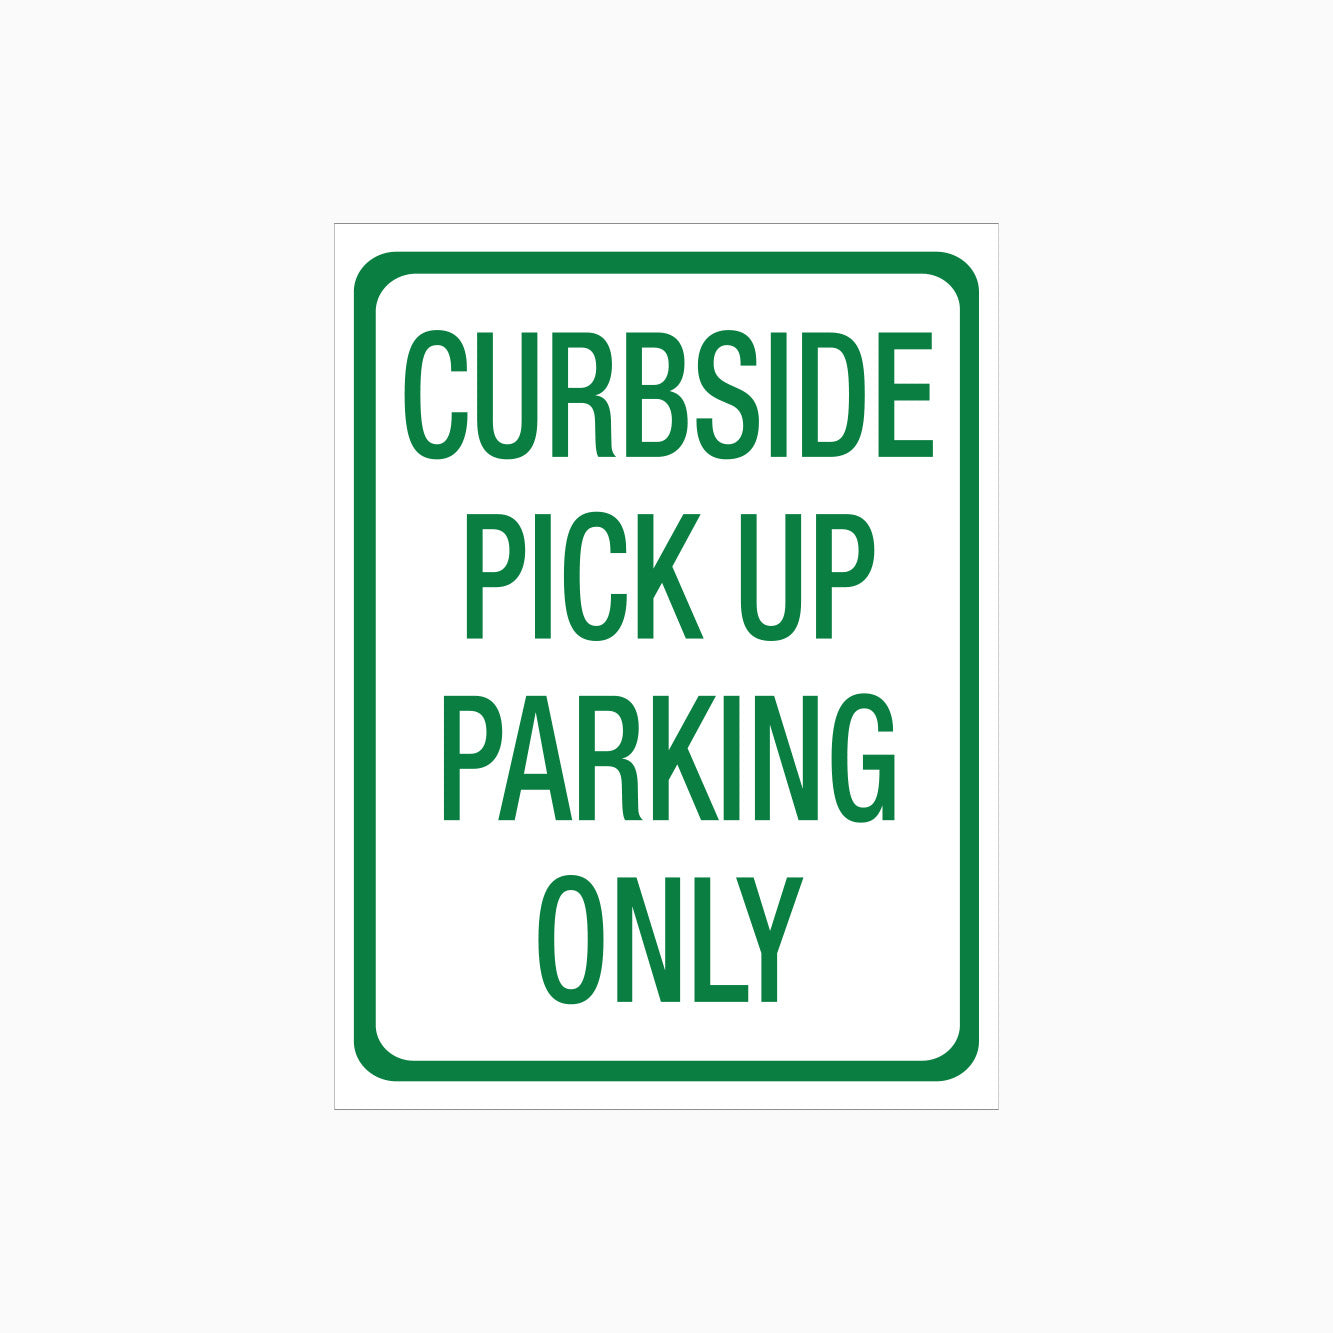 CURBSIDE PICK UP PARKING ONLY SIGN - PARKING SIGNS - SHOP ONLINE - GET SIGNS